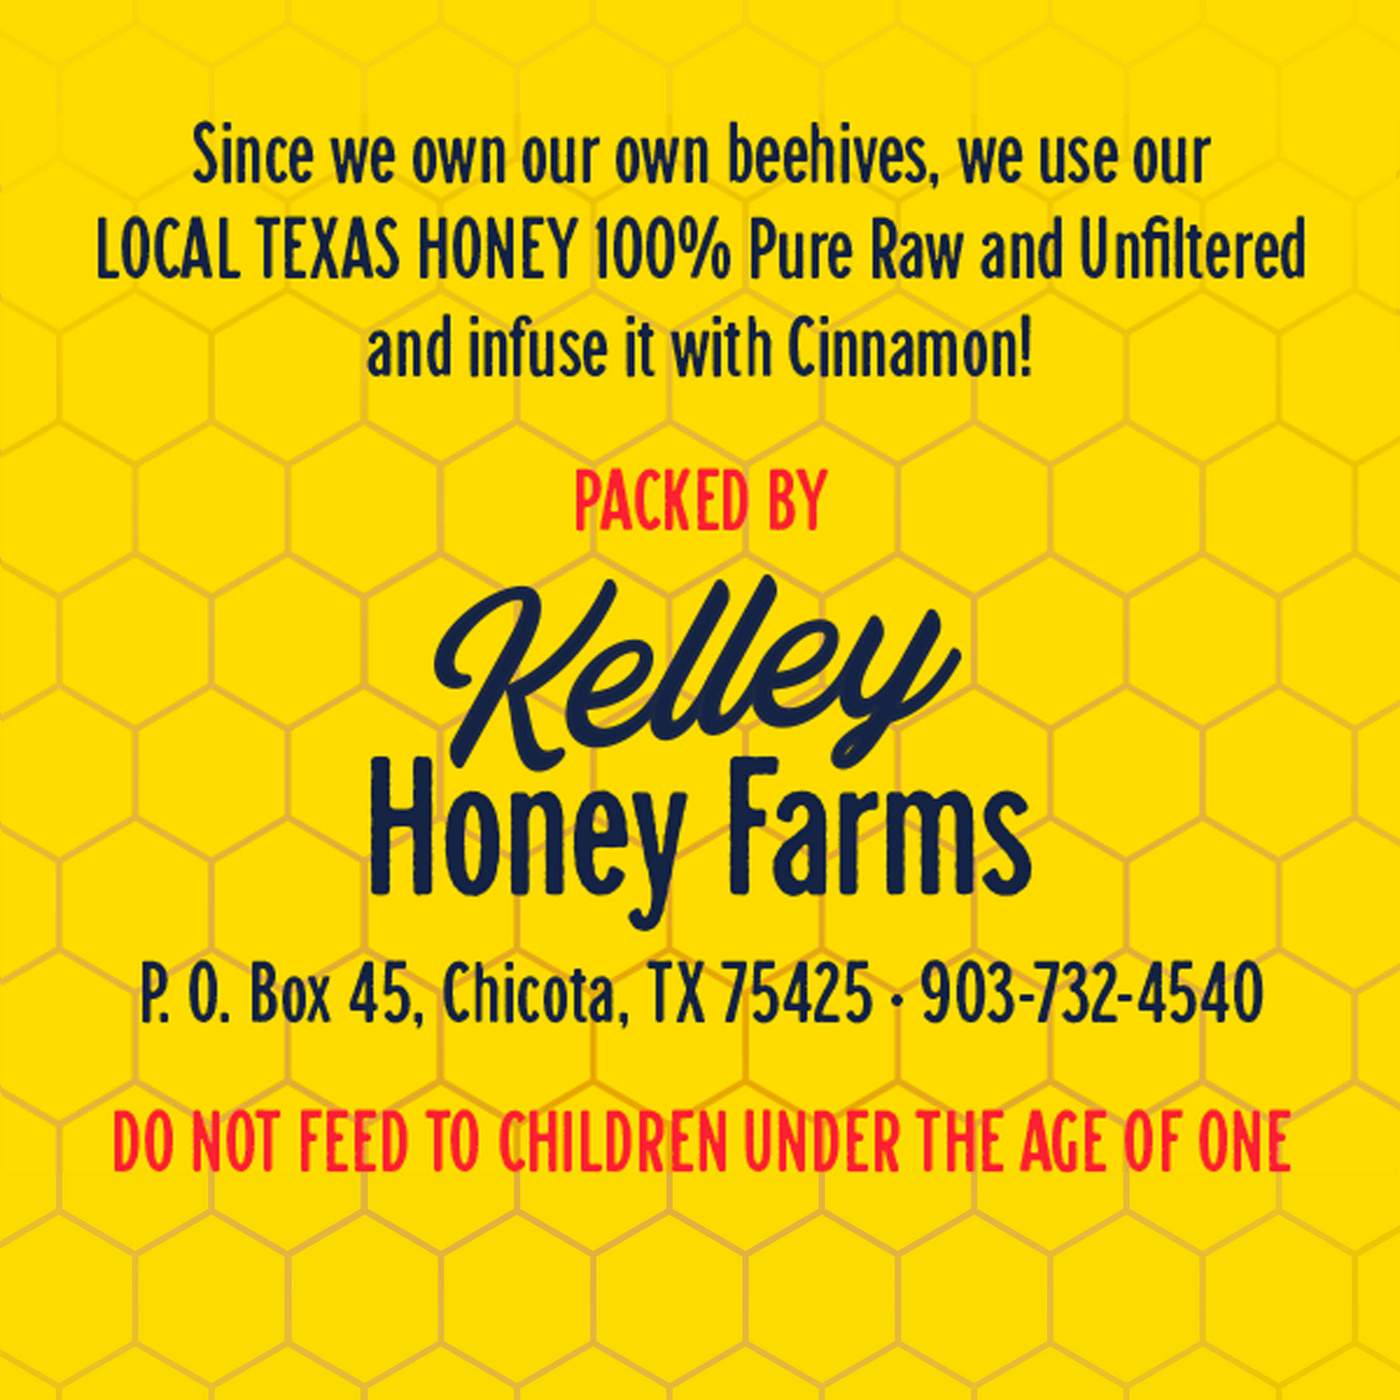 Kelley's Honey Cinnamon Infused Local Texas Honey; image 2 of 5